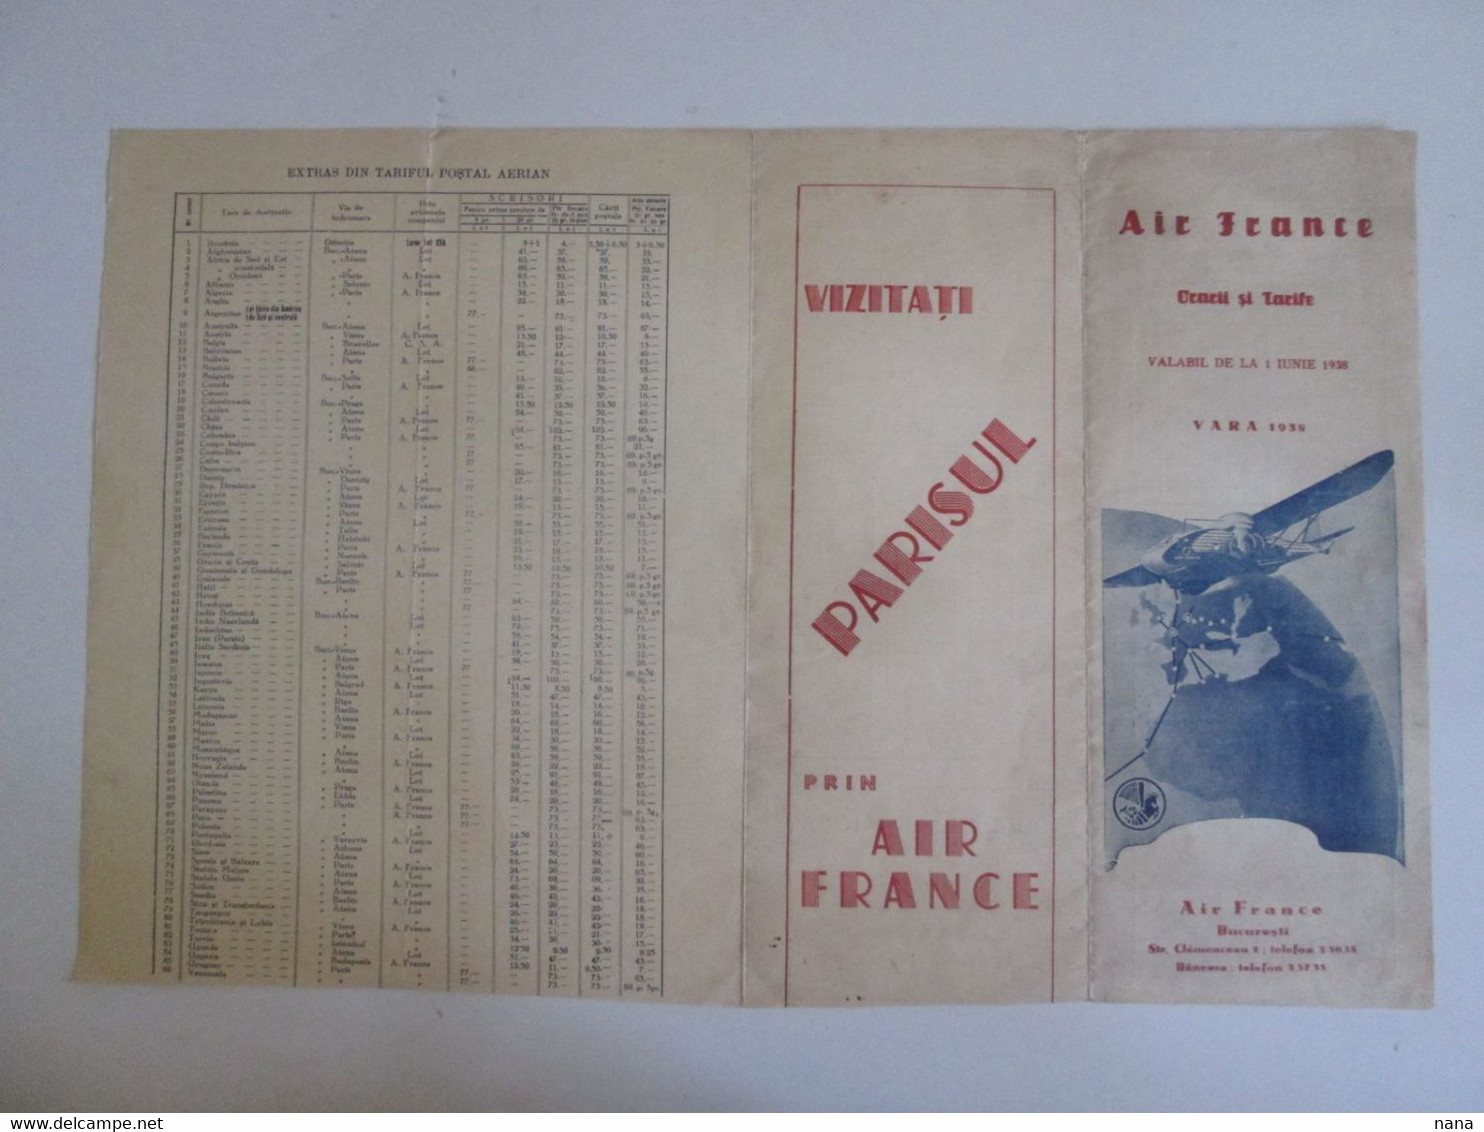 Rare! Air France Horaires Et Tarifs Des Vols Ete 1938 En Roumain/Air France Summer 1938 Timetable & Prices In Romanian - Zeitpläne